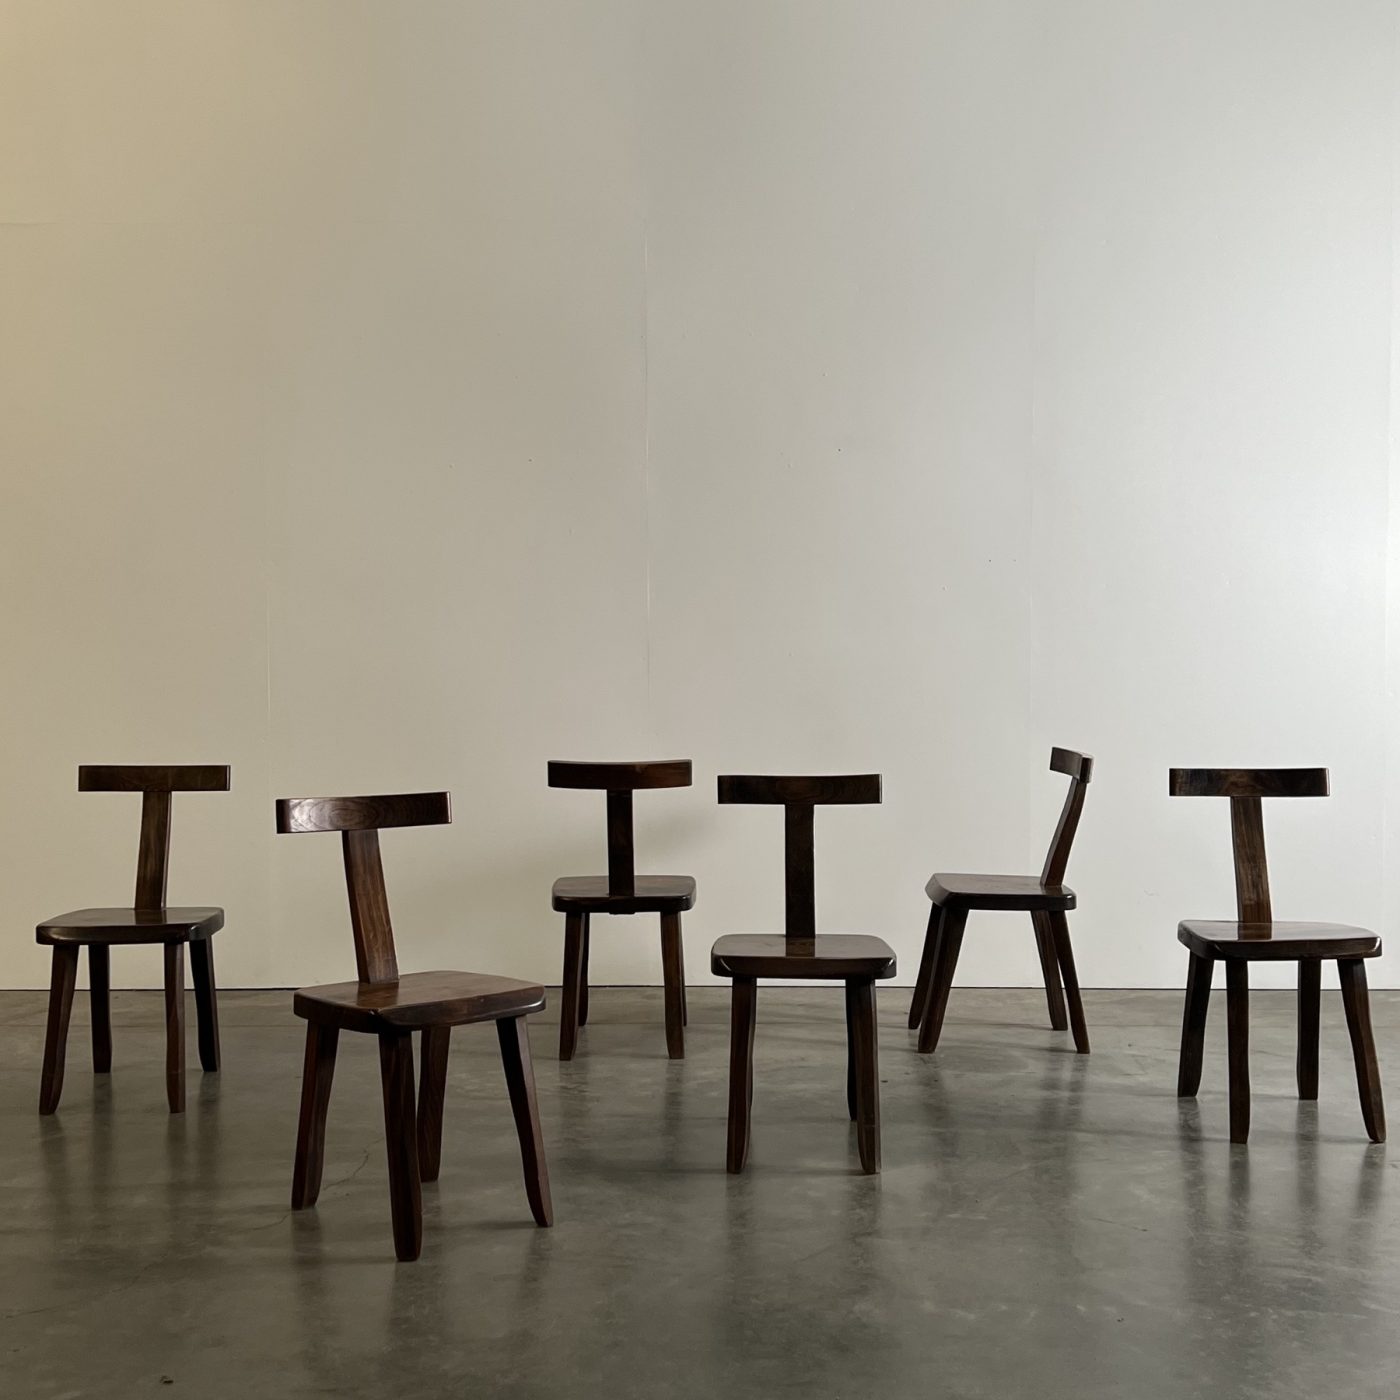 objet-hanninen-chairs0002